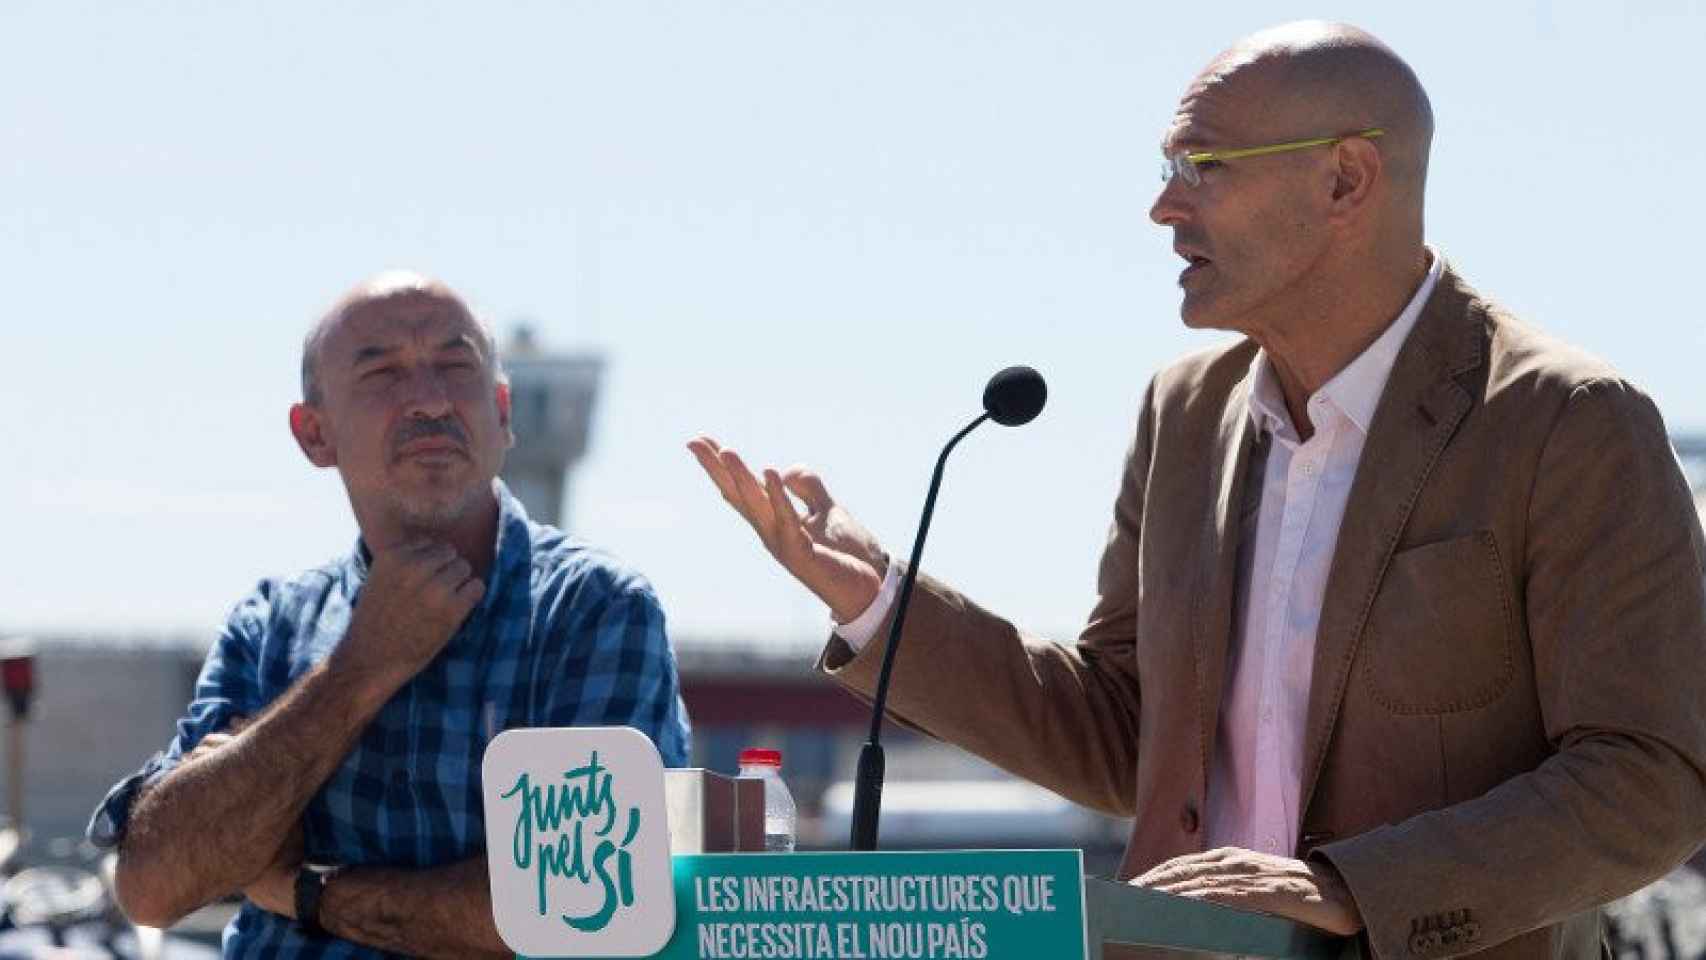 Los candidatos de Junts pel sí Germà Bel y Raül Romeva, en un acto en Tarragona